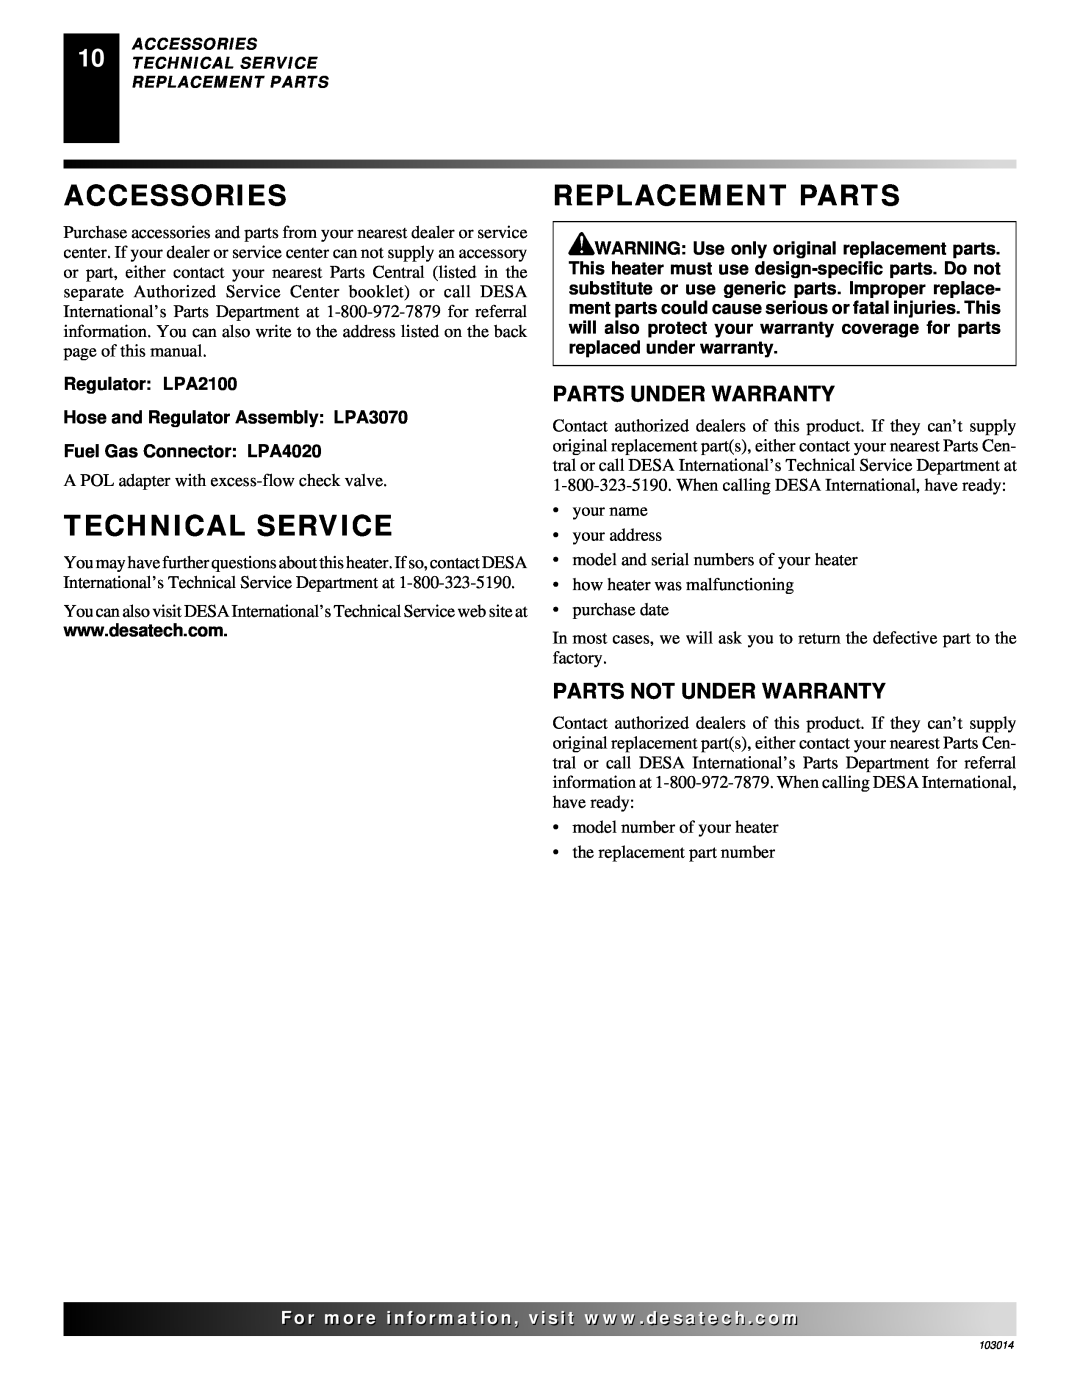 Desa LP155AT Accessories, Replacement Parts, Technical Service, Regulator LPA2100, Hose and Regulator Assembly LPA3070 